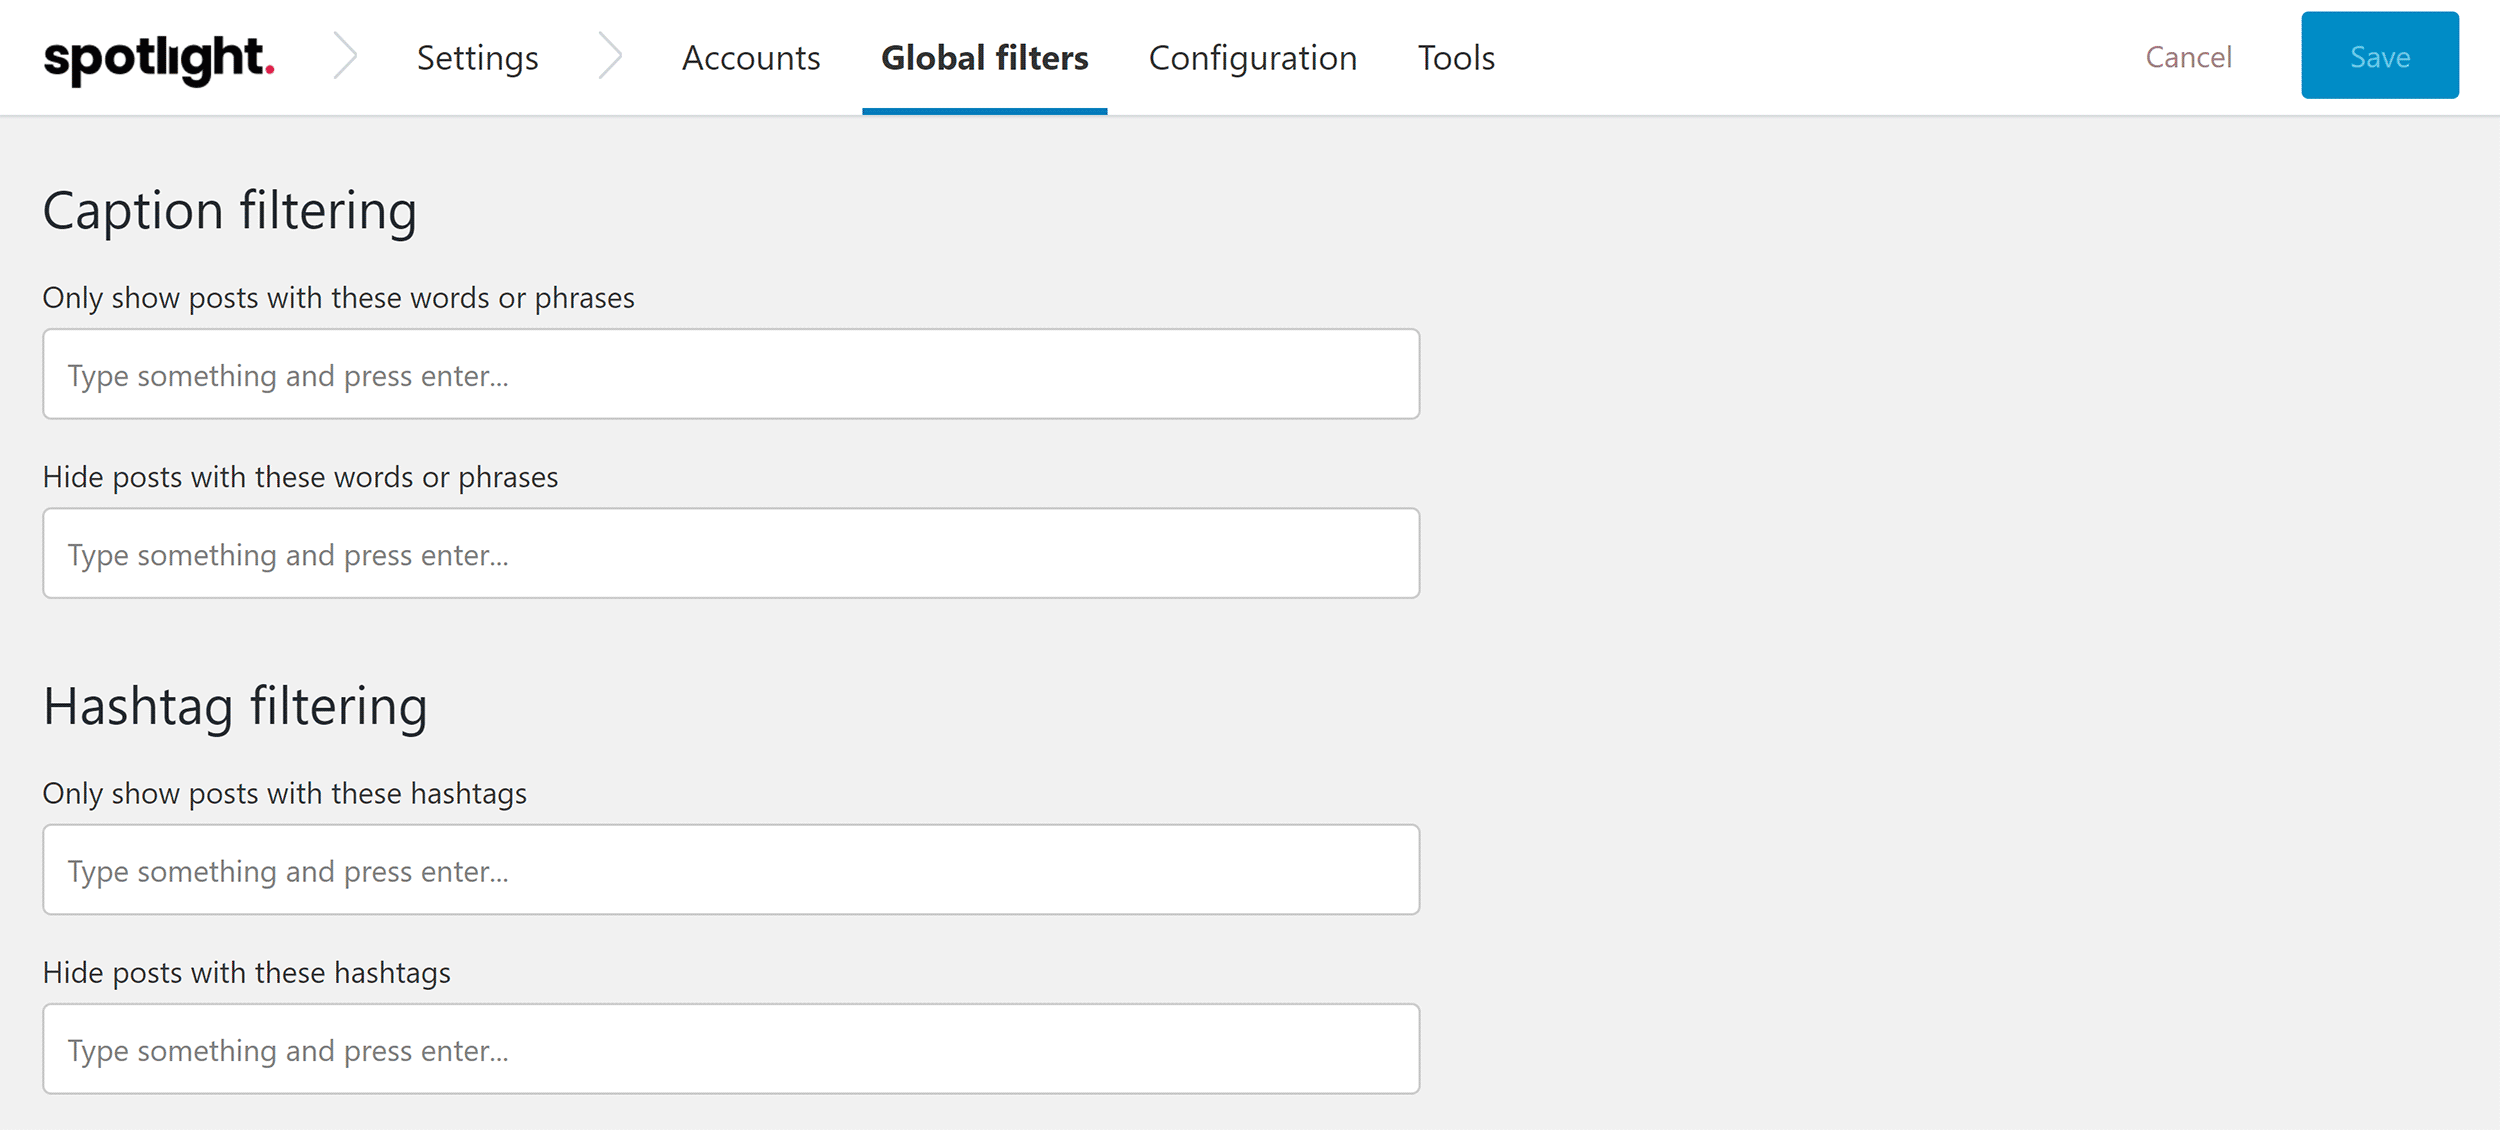 Global Filters